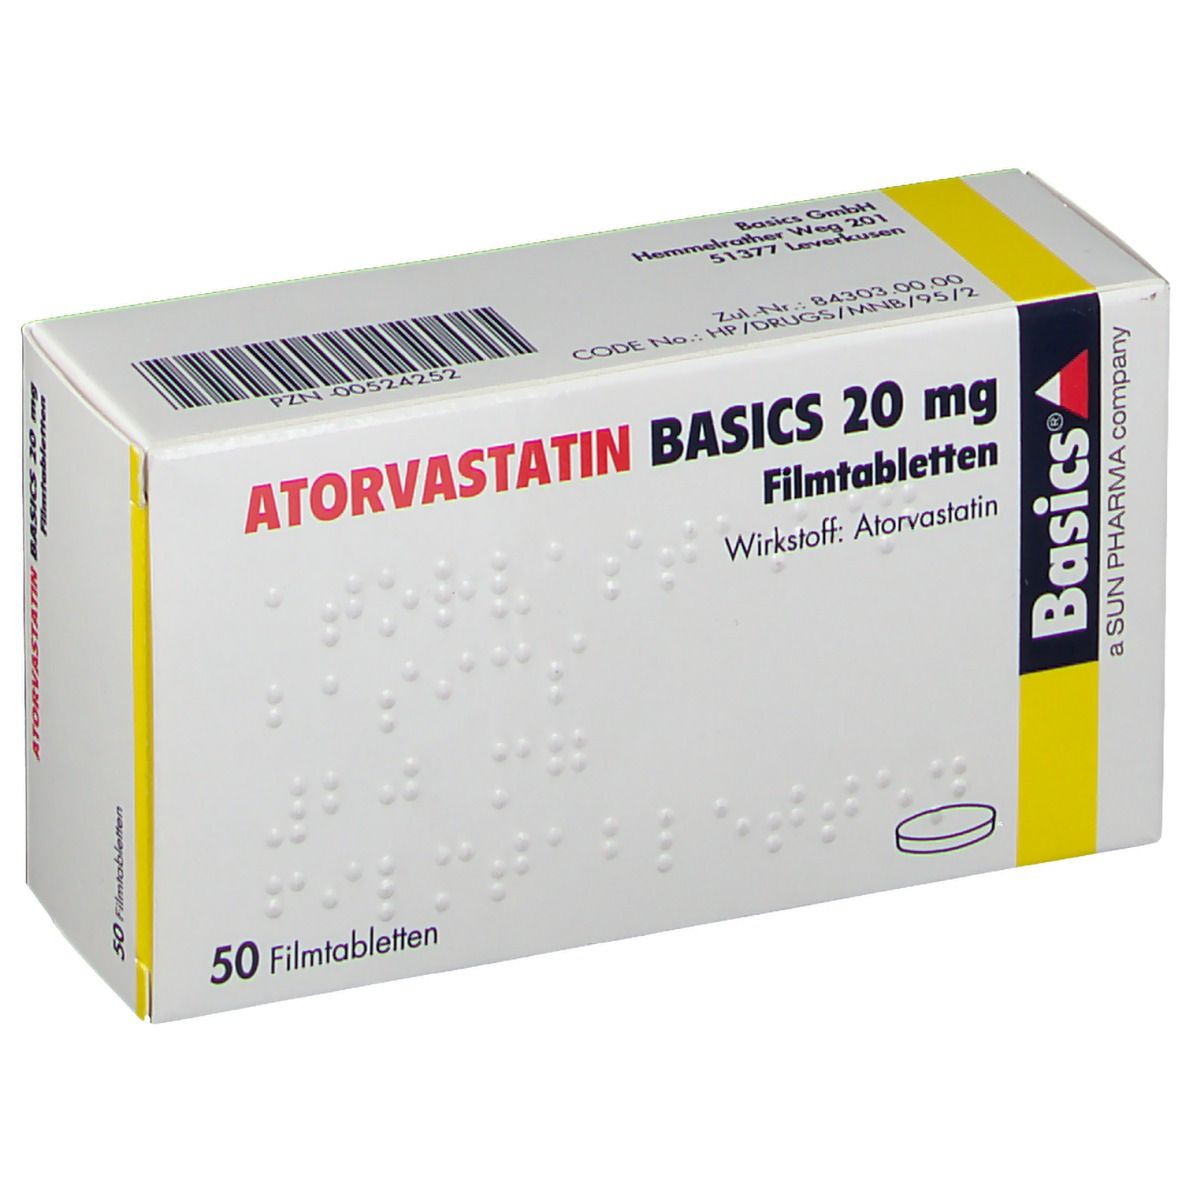 ATORVASTATIN BASICS 20 mg